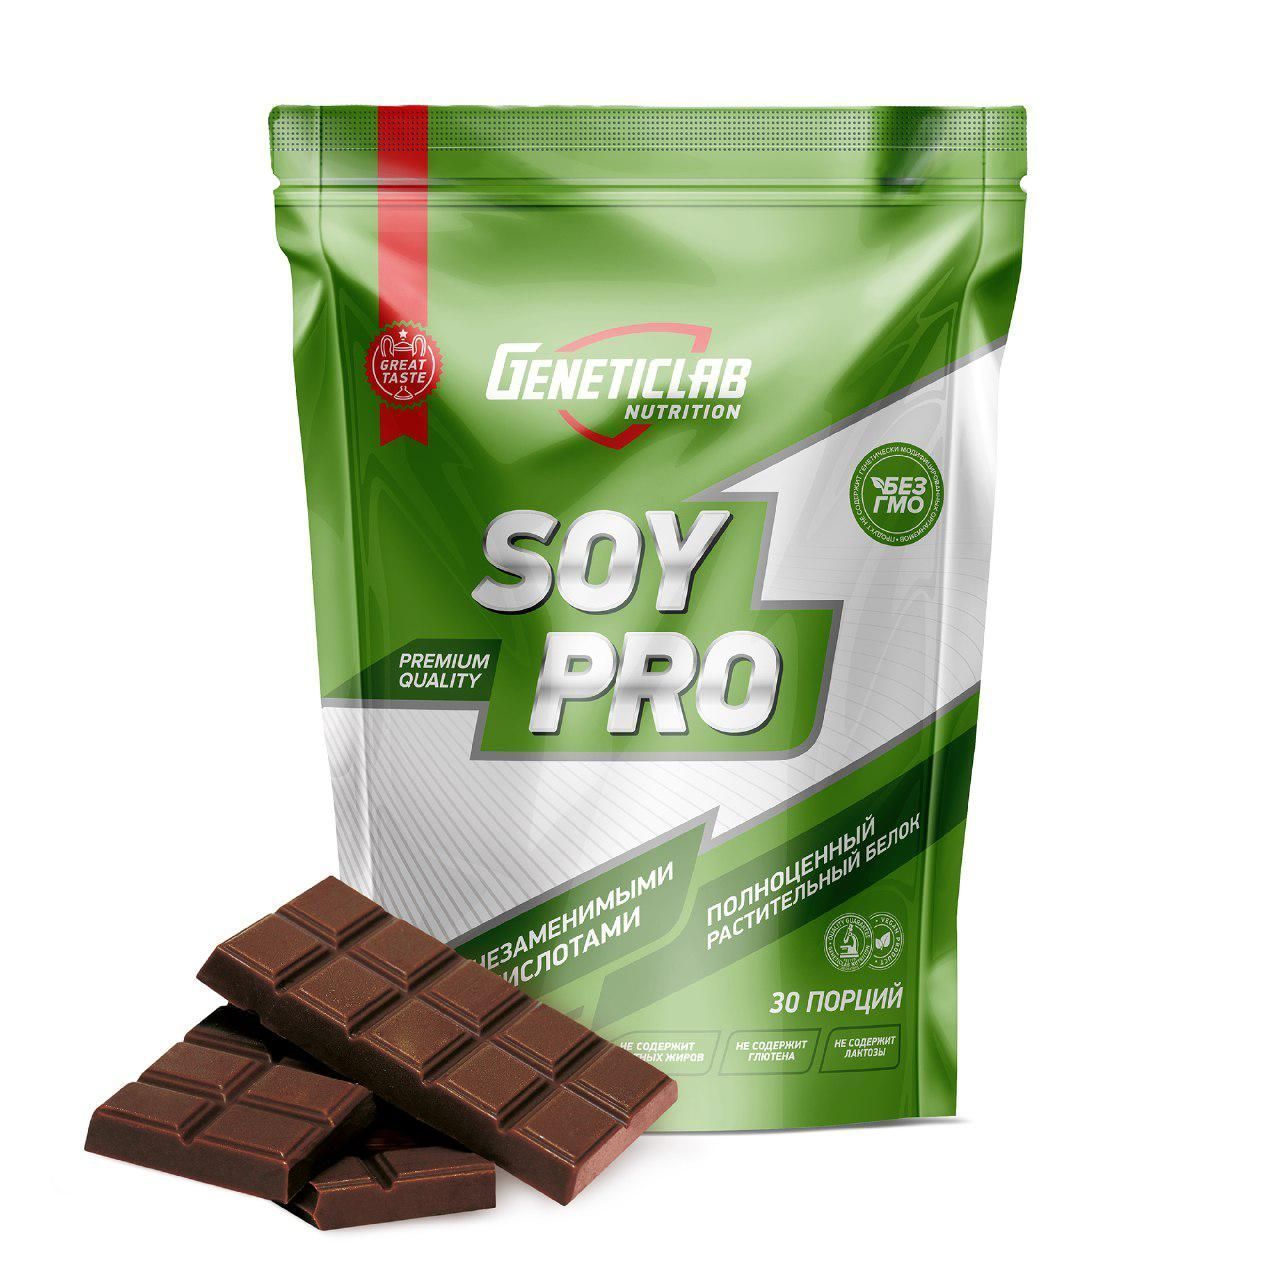 Протеин соевого белка. Geneticlab Nutrition soy Pro. Isolate протеин шоколад. Geneticlab Nutrition soy Pro клубника. Geneticlab. Whey Pro 1000g - шоколад.